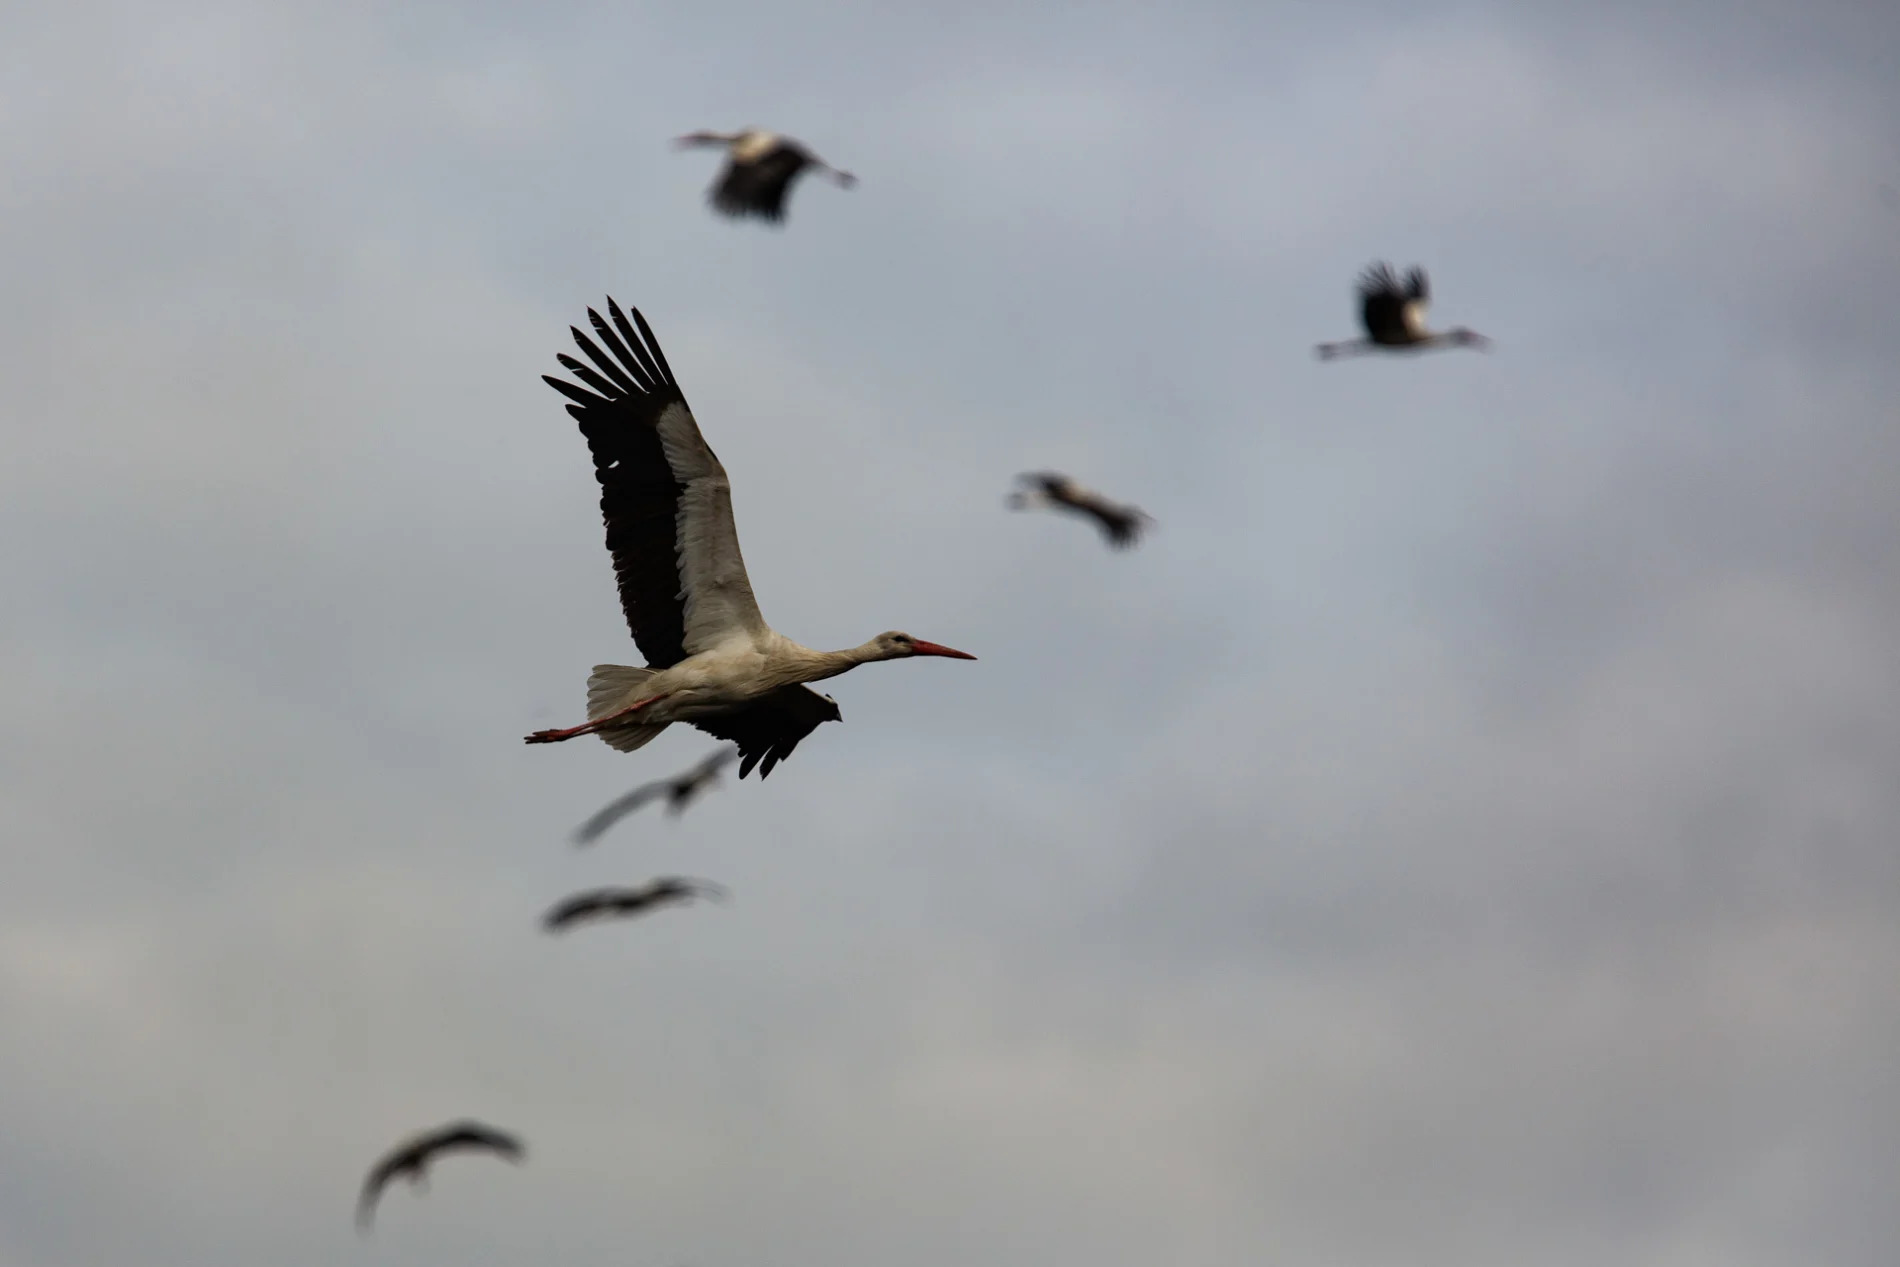 Storks in flight at fire